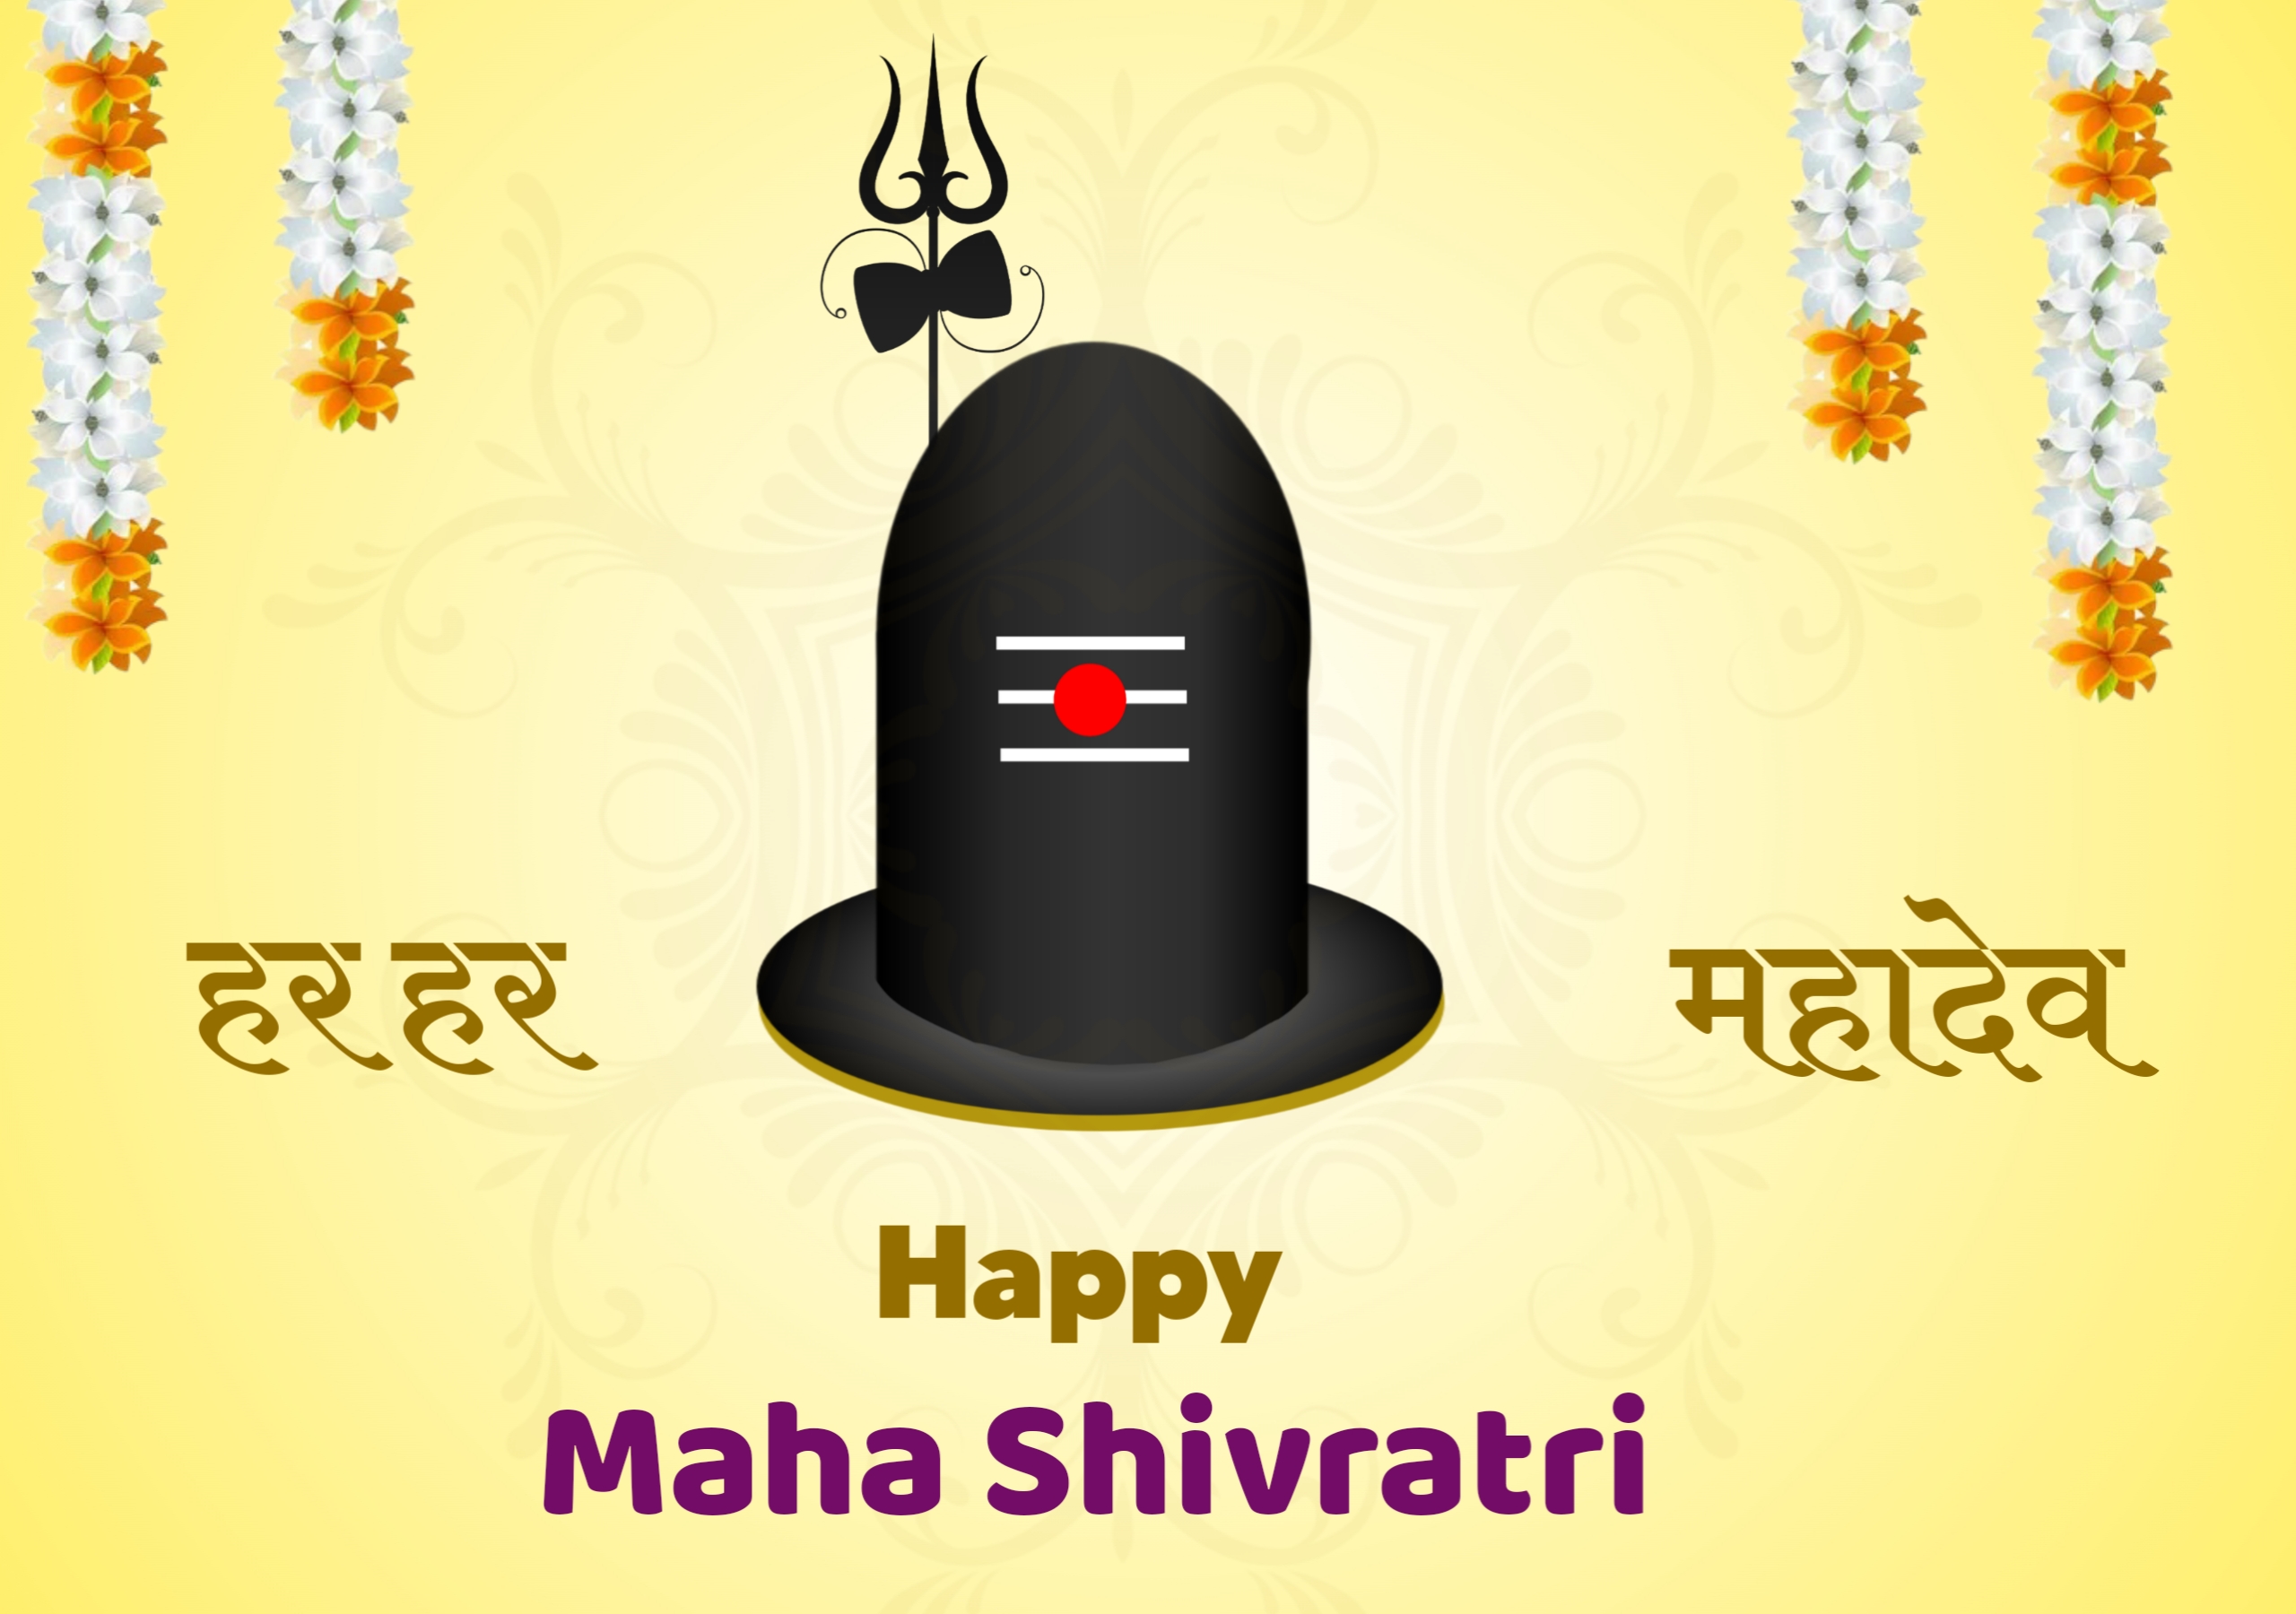 New Maha Shivratri HD Image Stock Free 